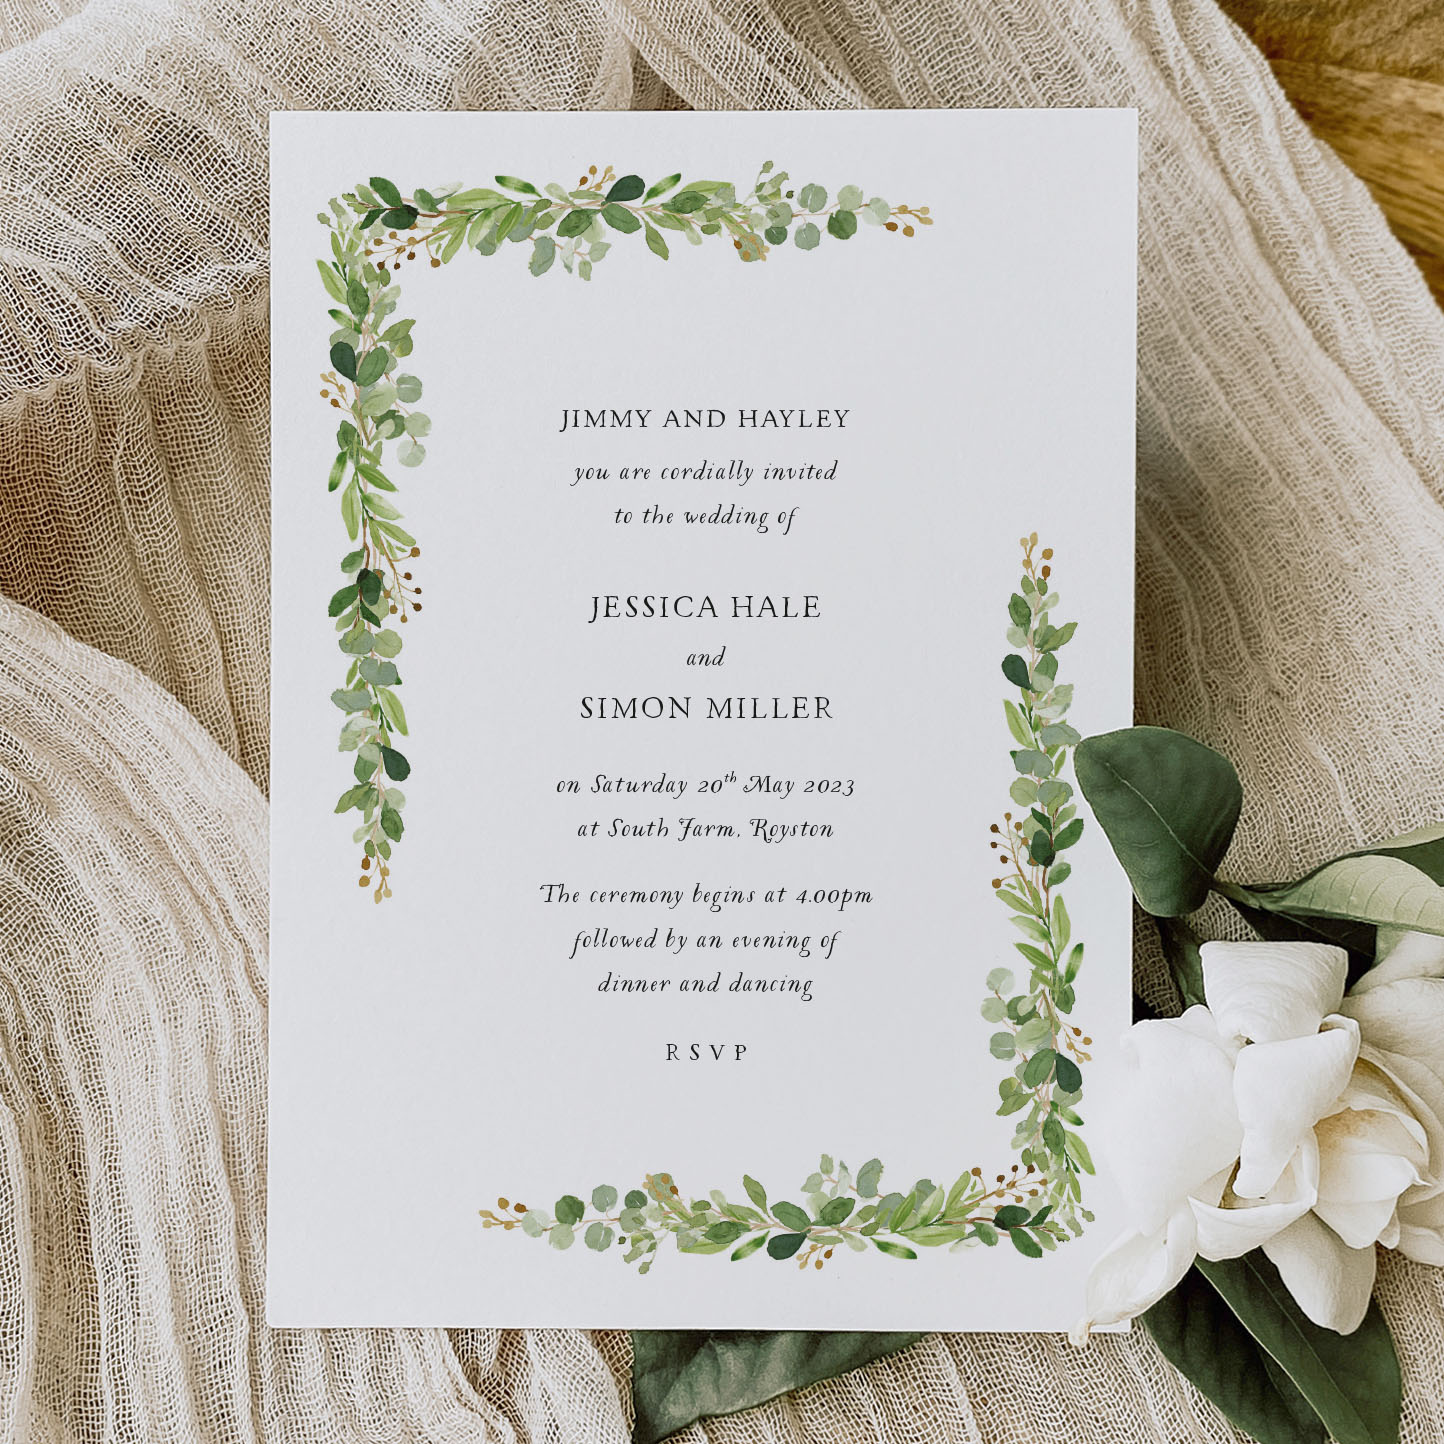 Showing Leafy Garland - Rustic wedding invitation and wedding stationery. It has a green leaf border on a white card